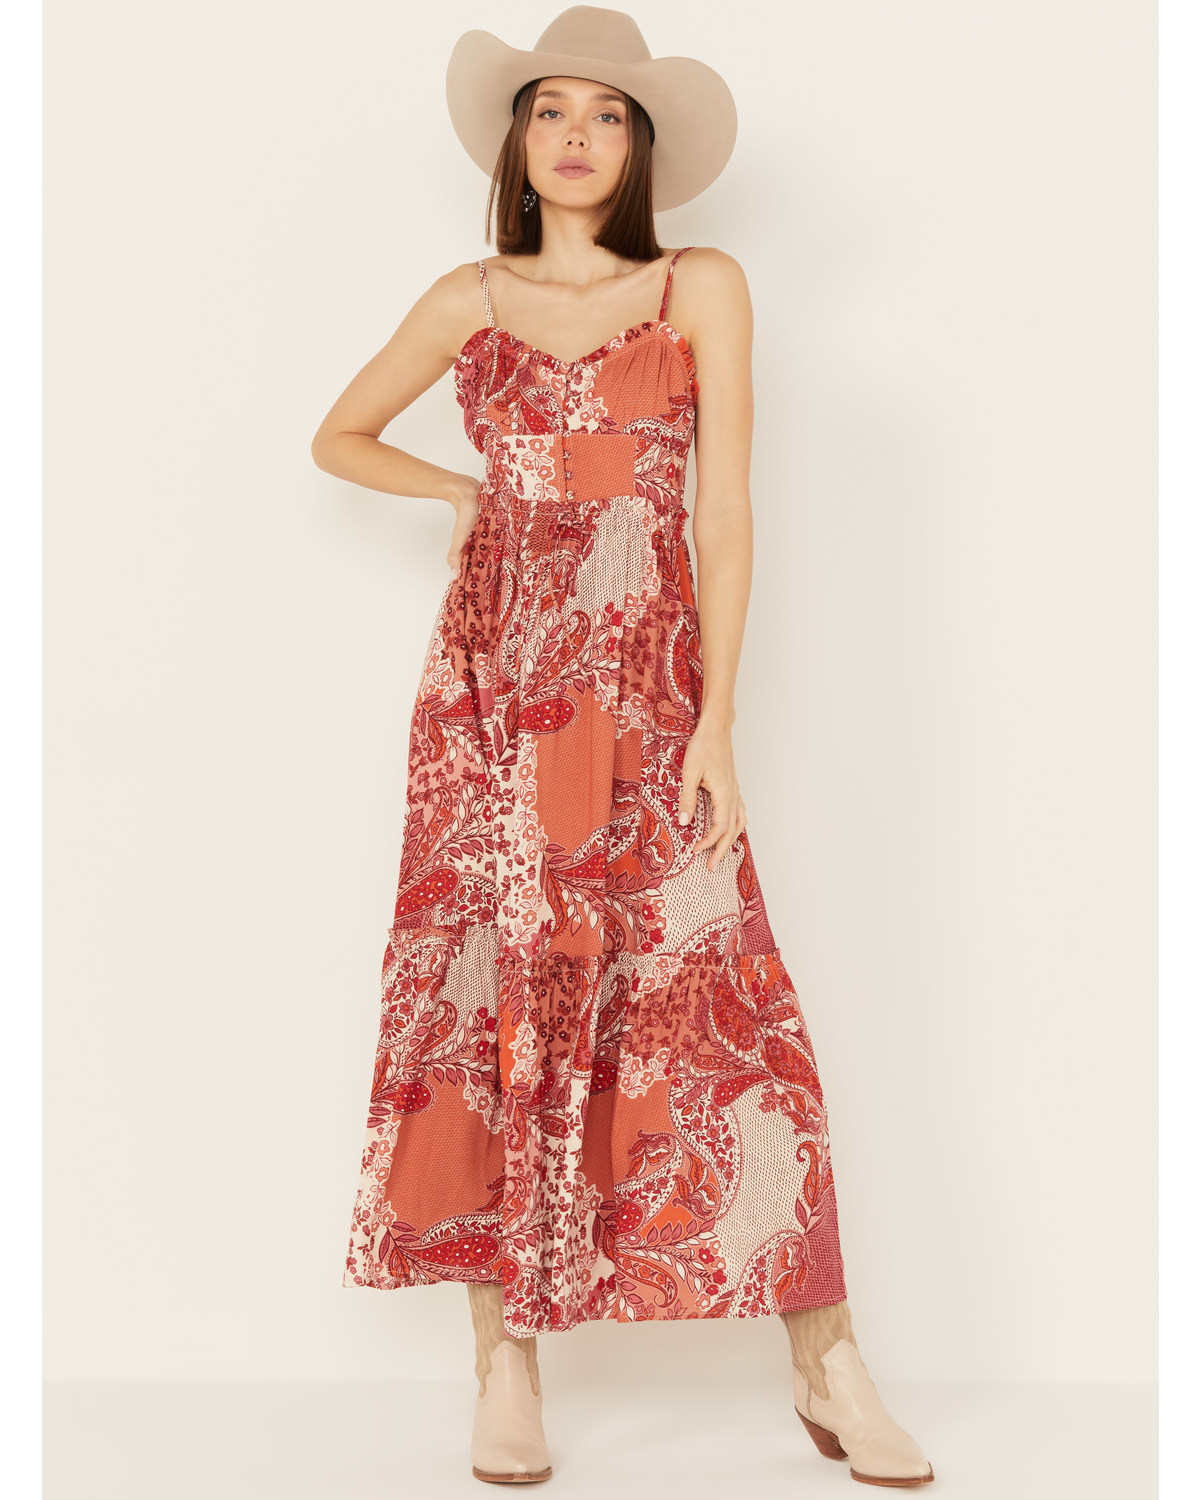 Bila77 Women's Ludlow Print Maxi Dress